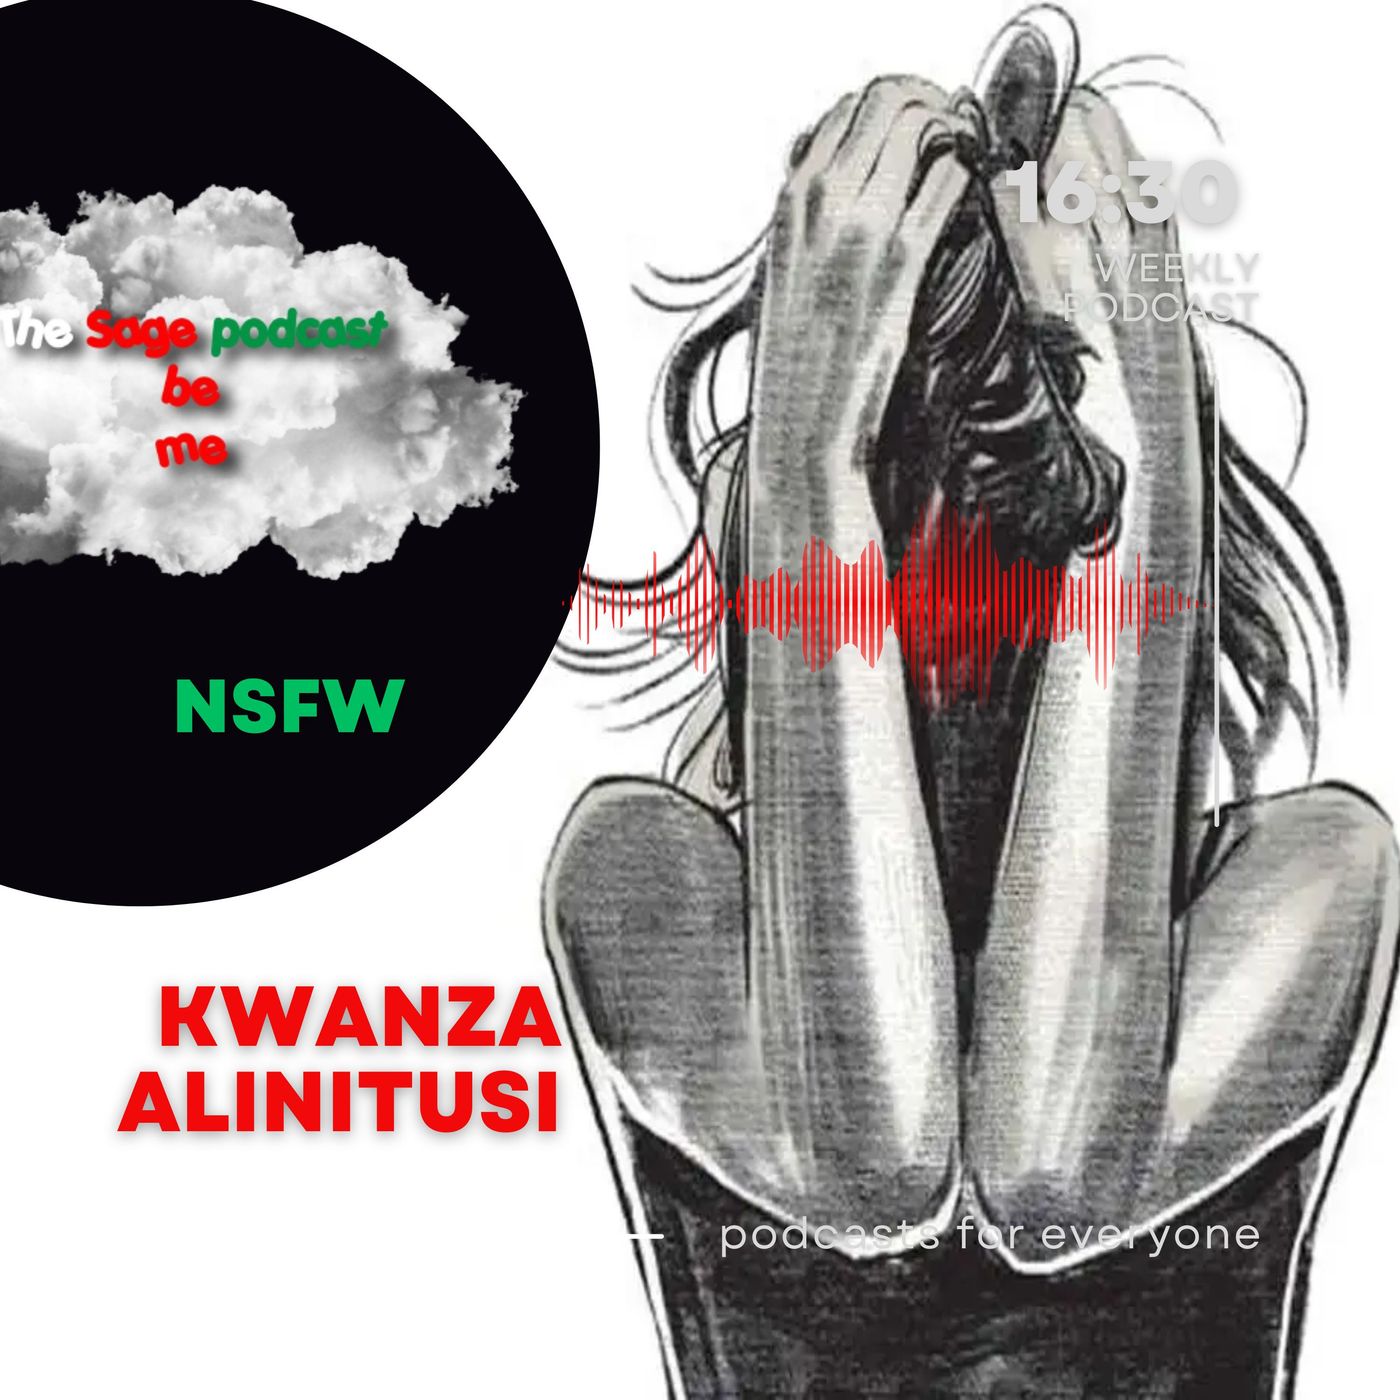 02) Kwanza alinitusi